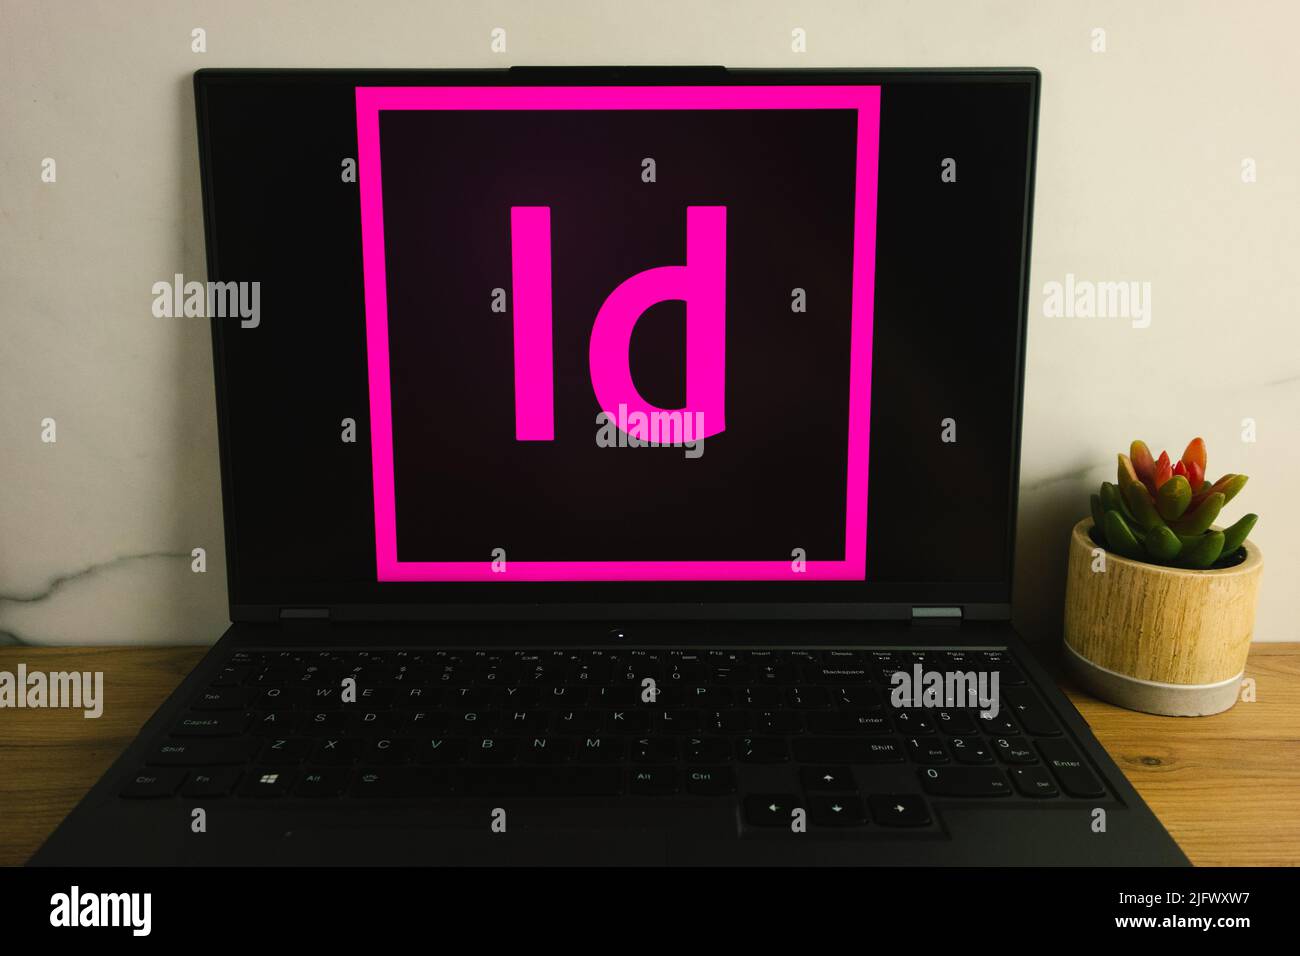 KONSKIE, POLAND - July 05, 2022: Adobe InDesign application logo displayed on laptop computer screen Stock Photo